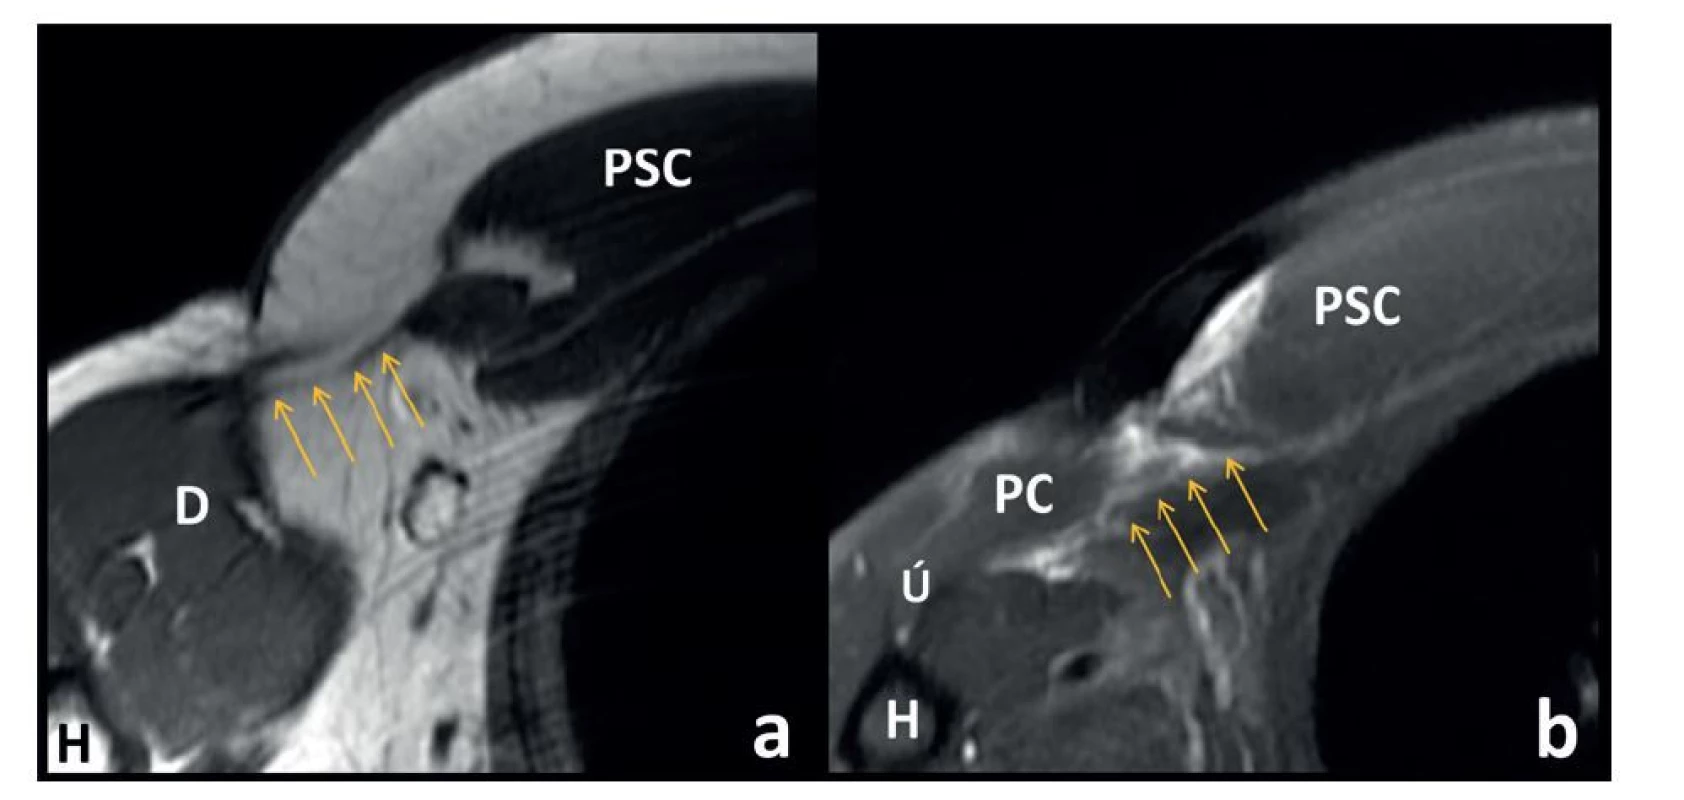 Ruptura šlachy m. pectoralis major na MR axiálních řezech<br>
Fig. 4: MRI axial sections of the pectoralis major rupture